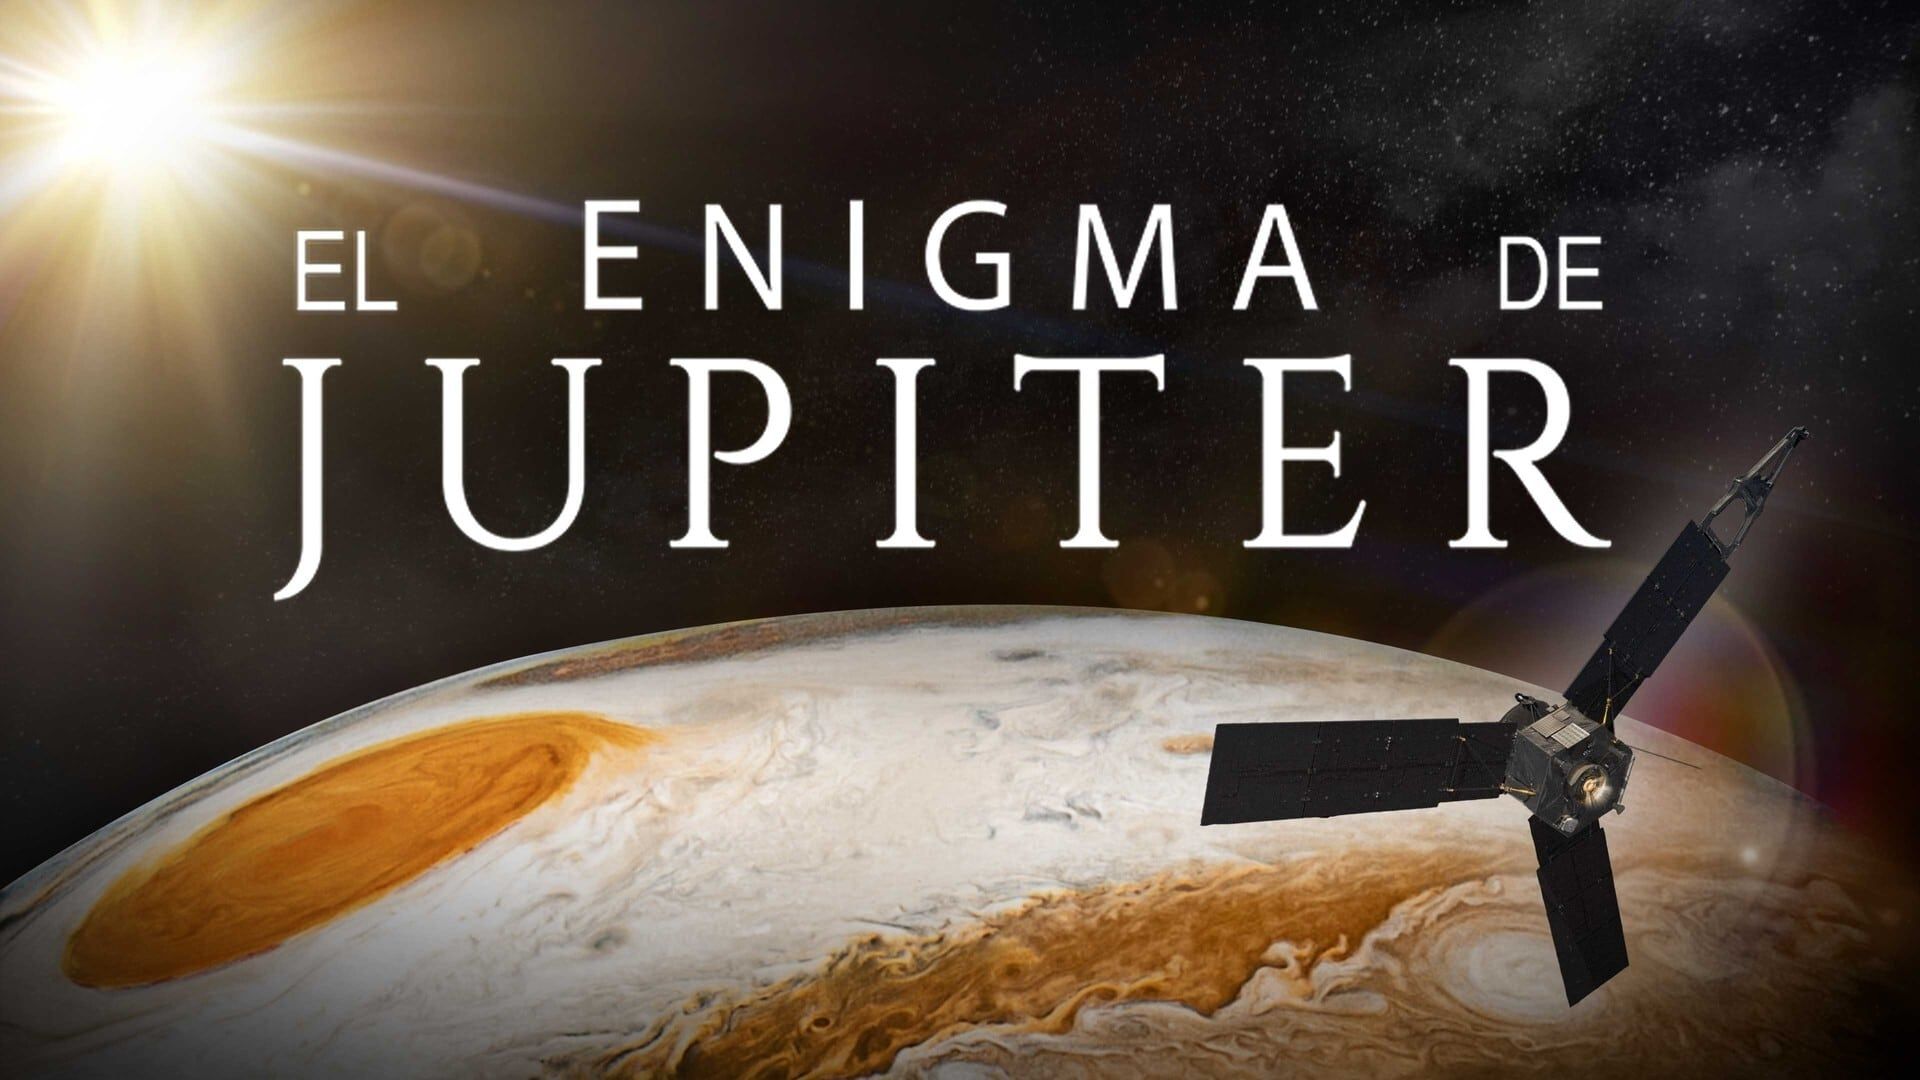 The Jupiter Enigma background